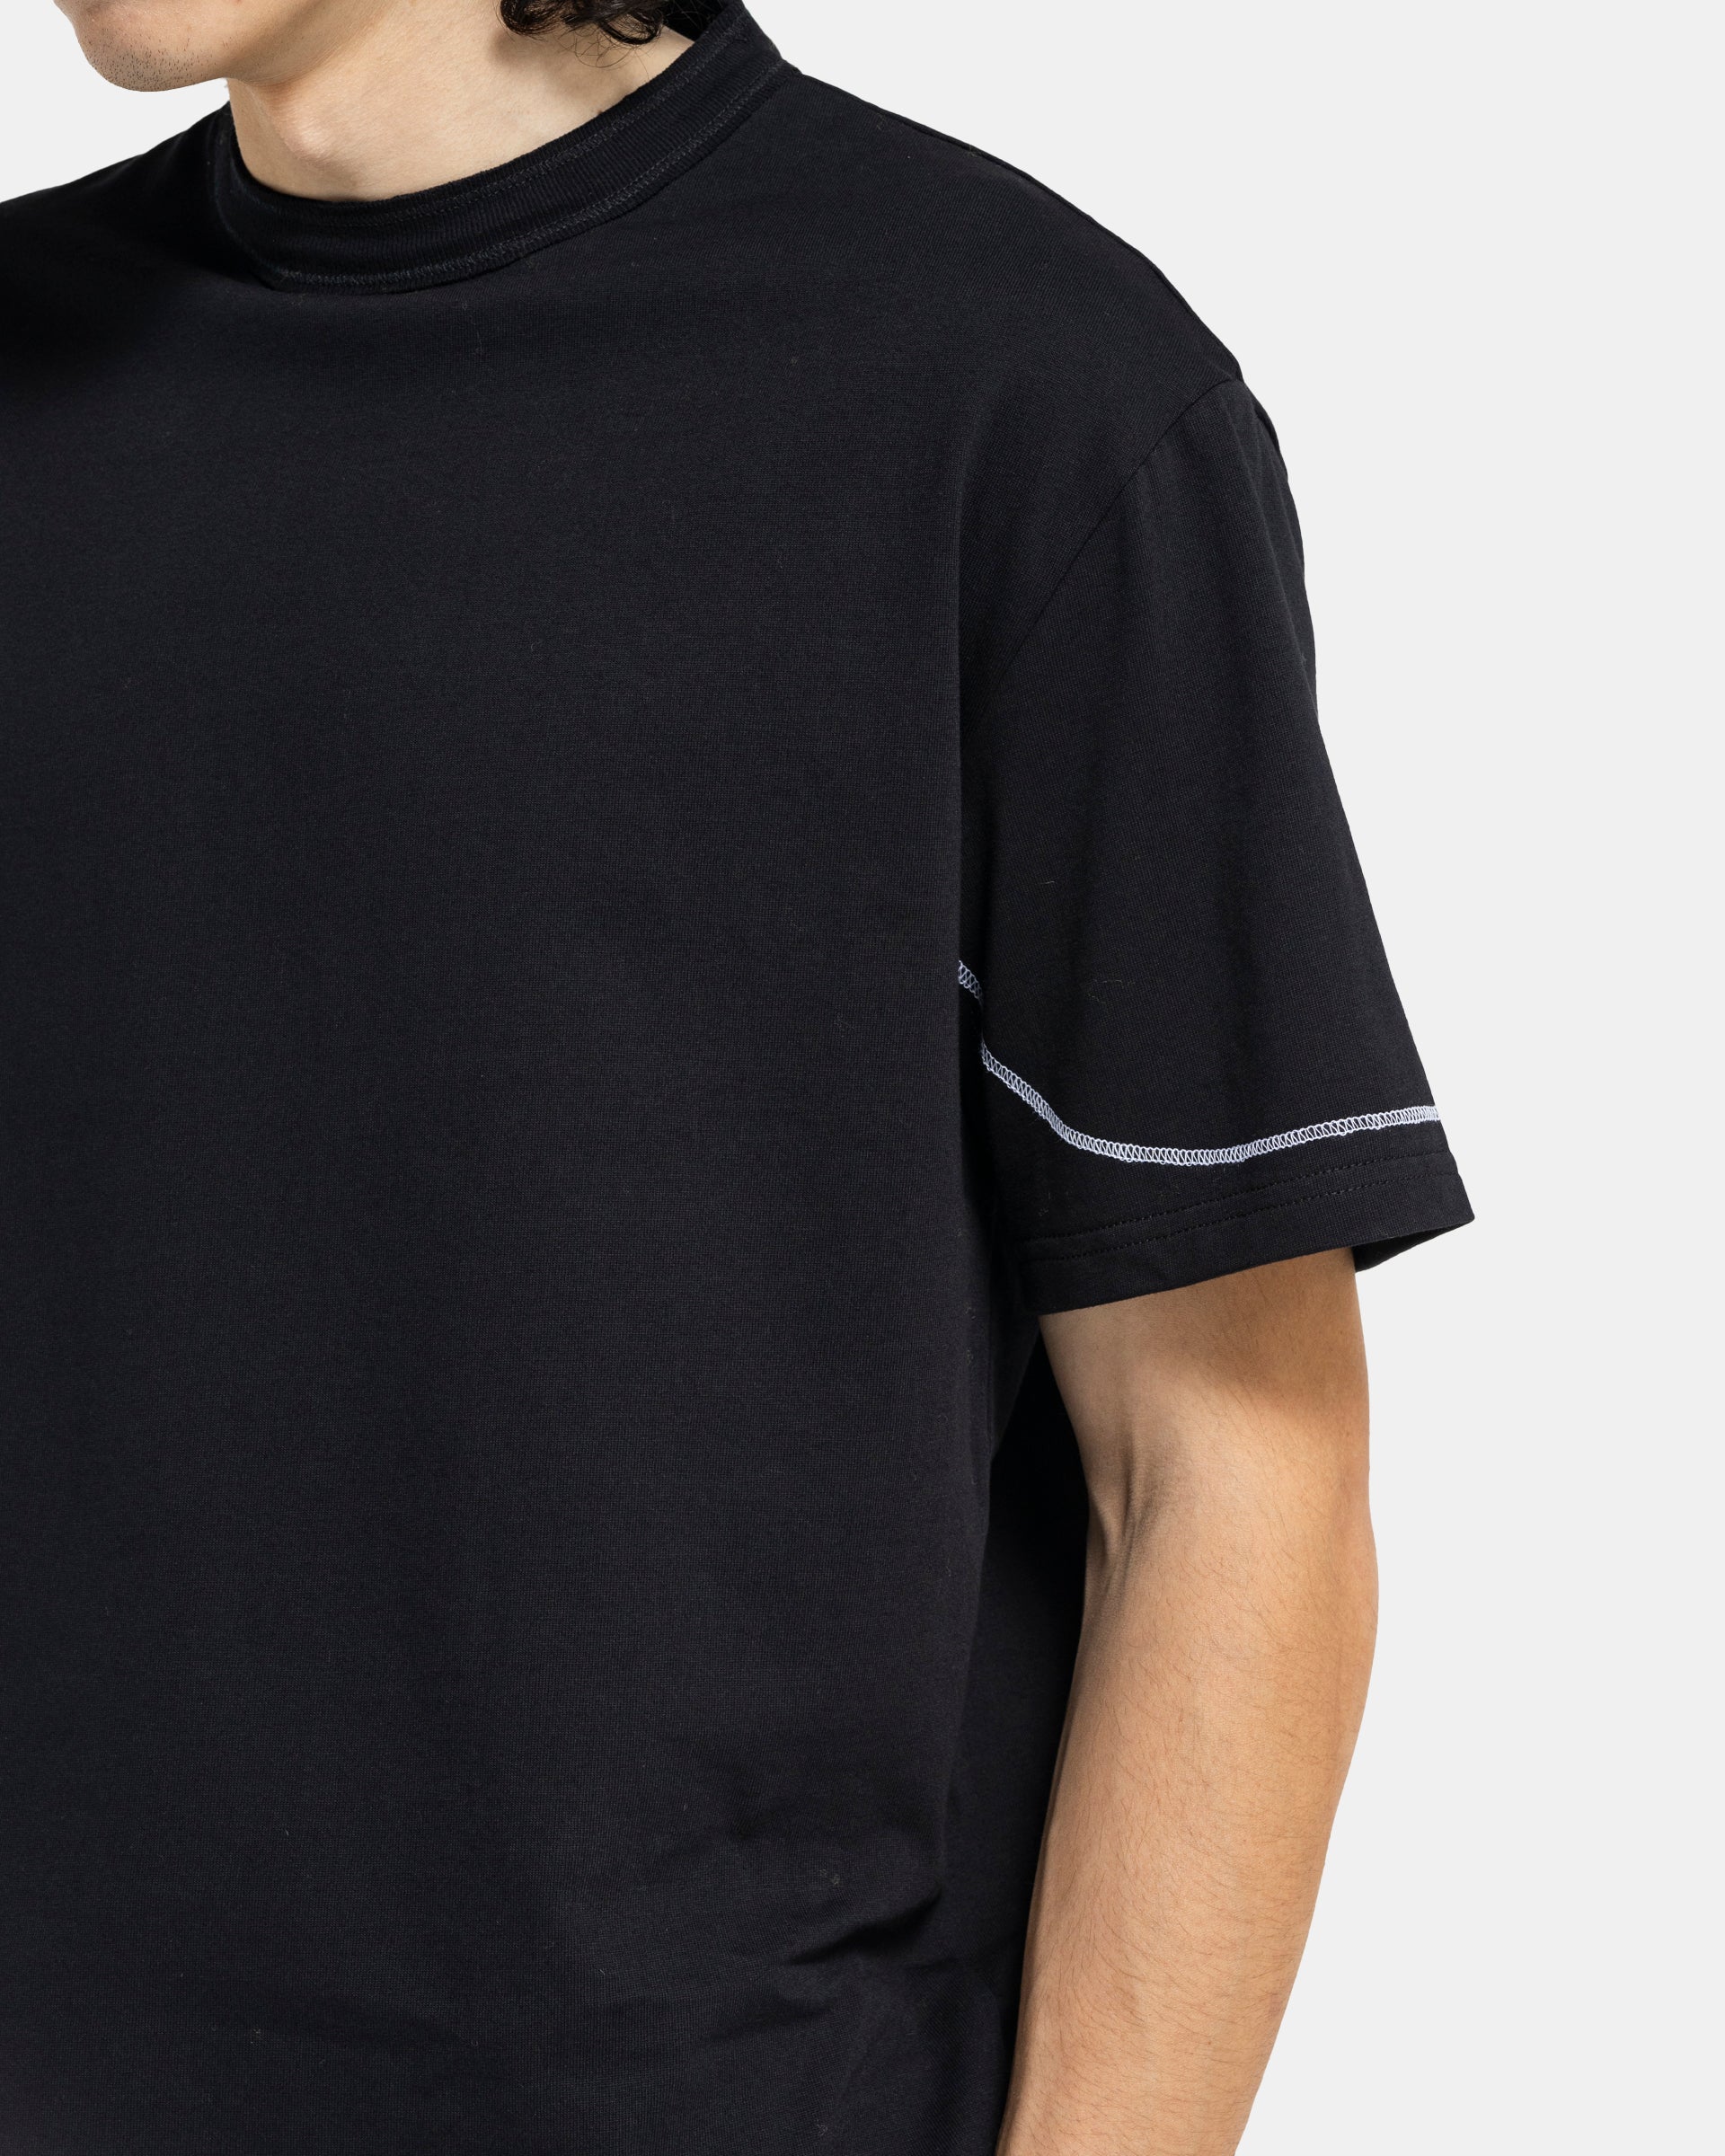 Lock Short Sleeve T-Shirt in Black